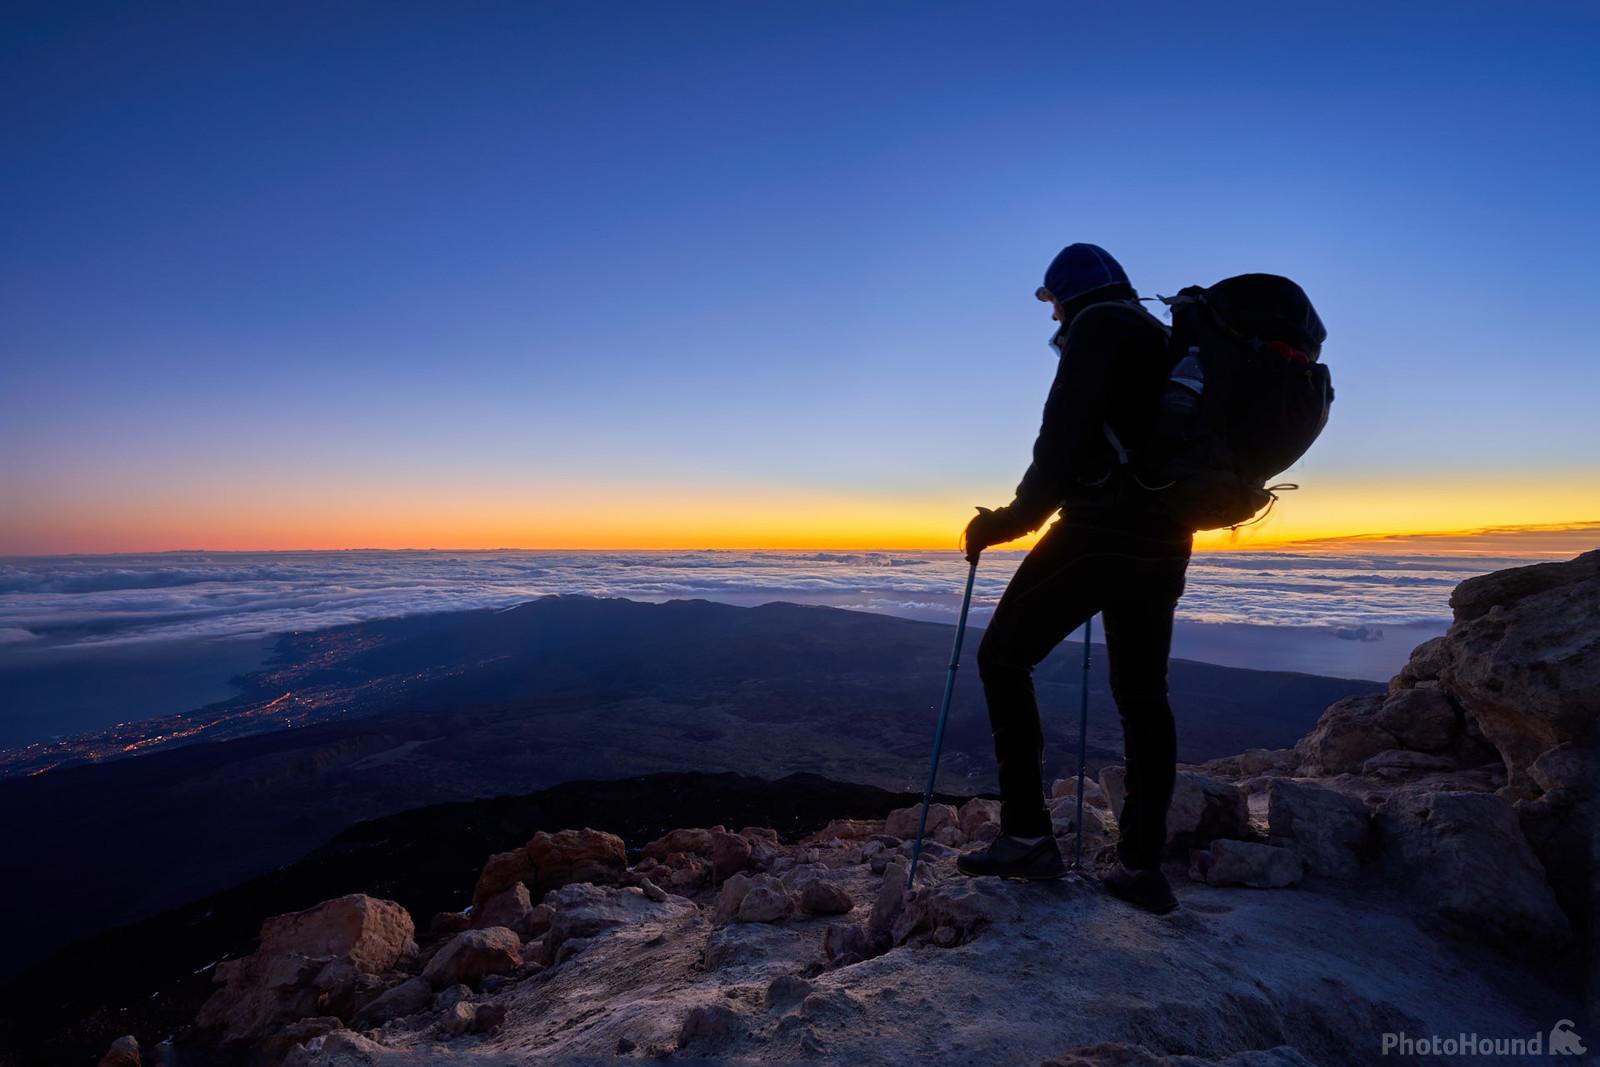 Image of Pico del Teide summit by Antun Cerovecki